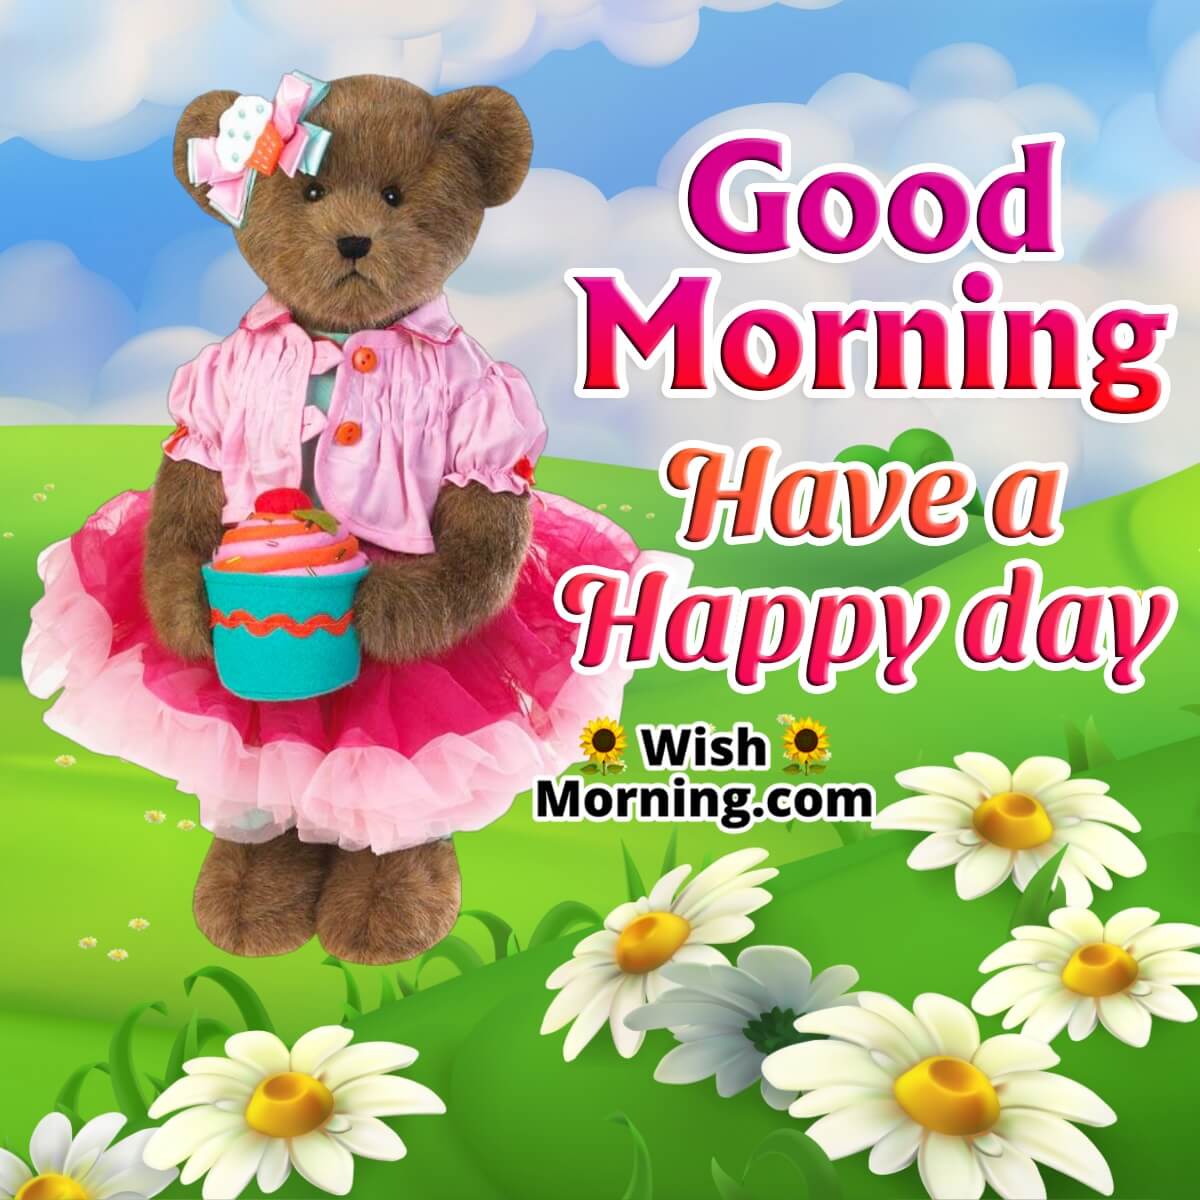 Good Morning With Happy Teddy Bear